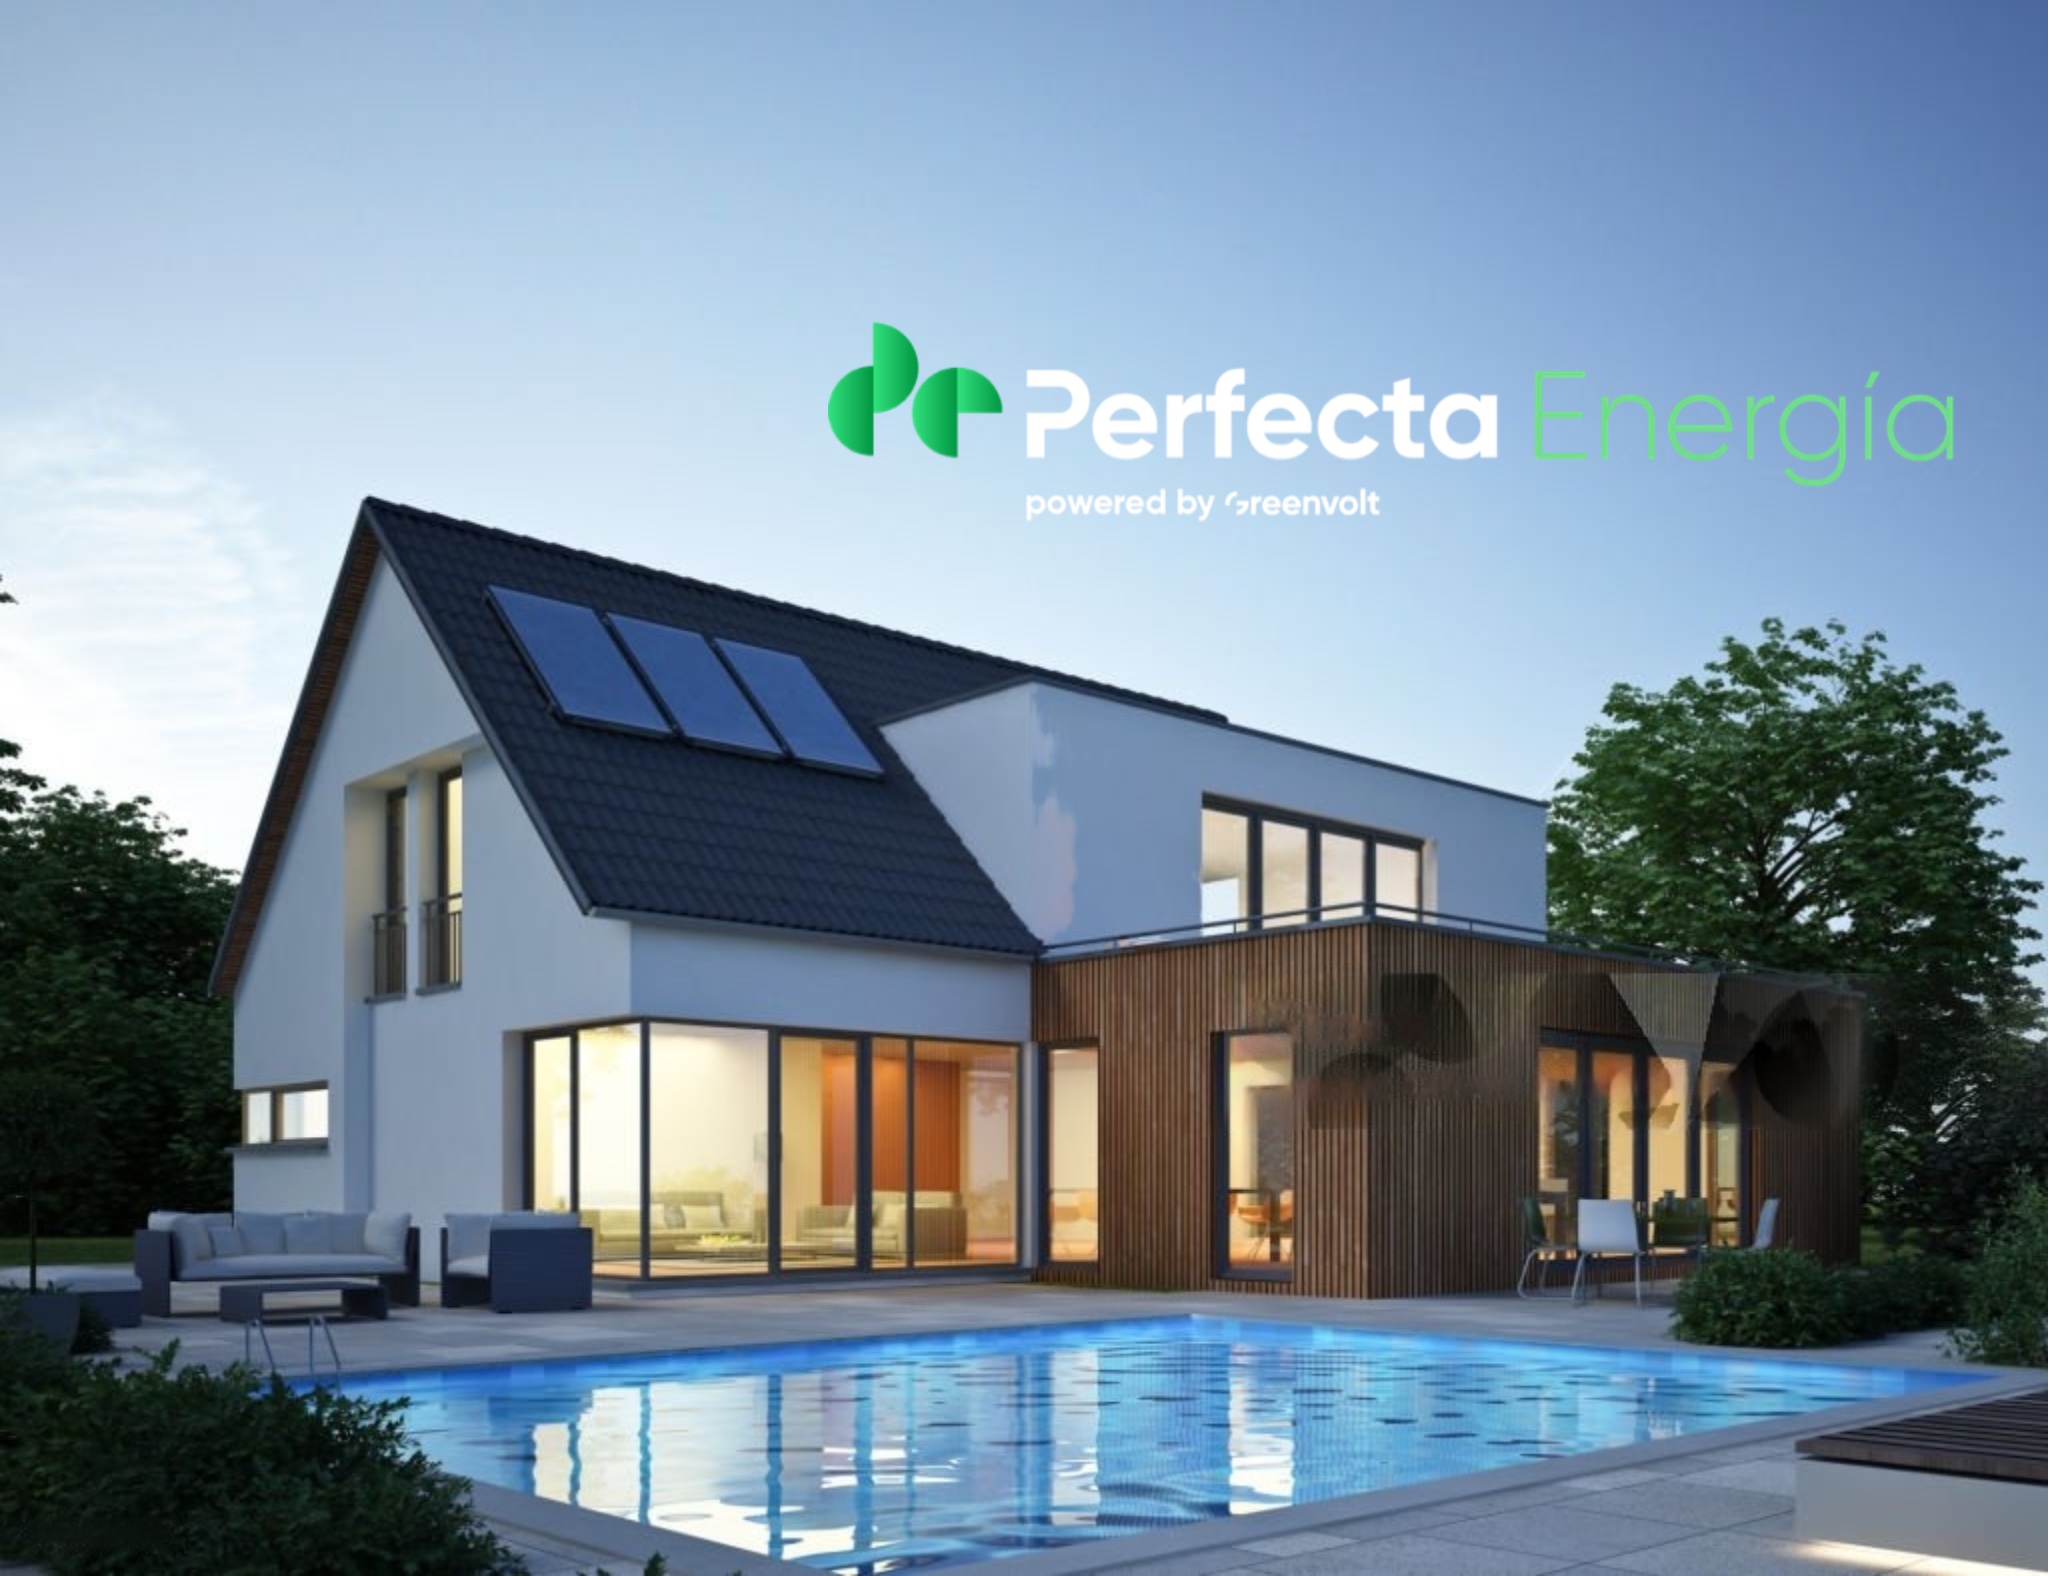 casa con placas solares con batería o sin batería iluminada en un atardecer frente a la piscina con el logo de perfecta energía